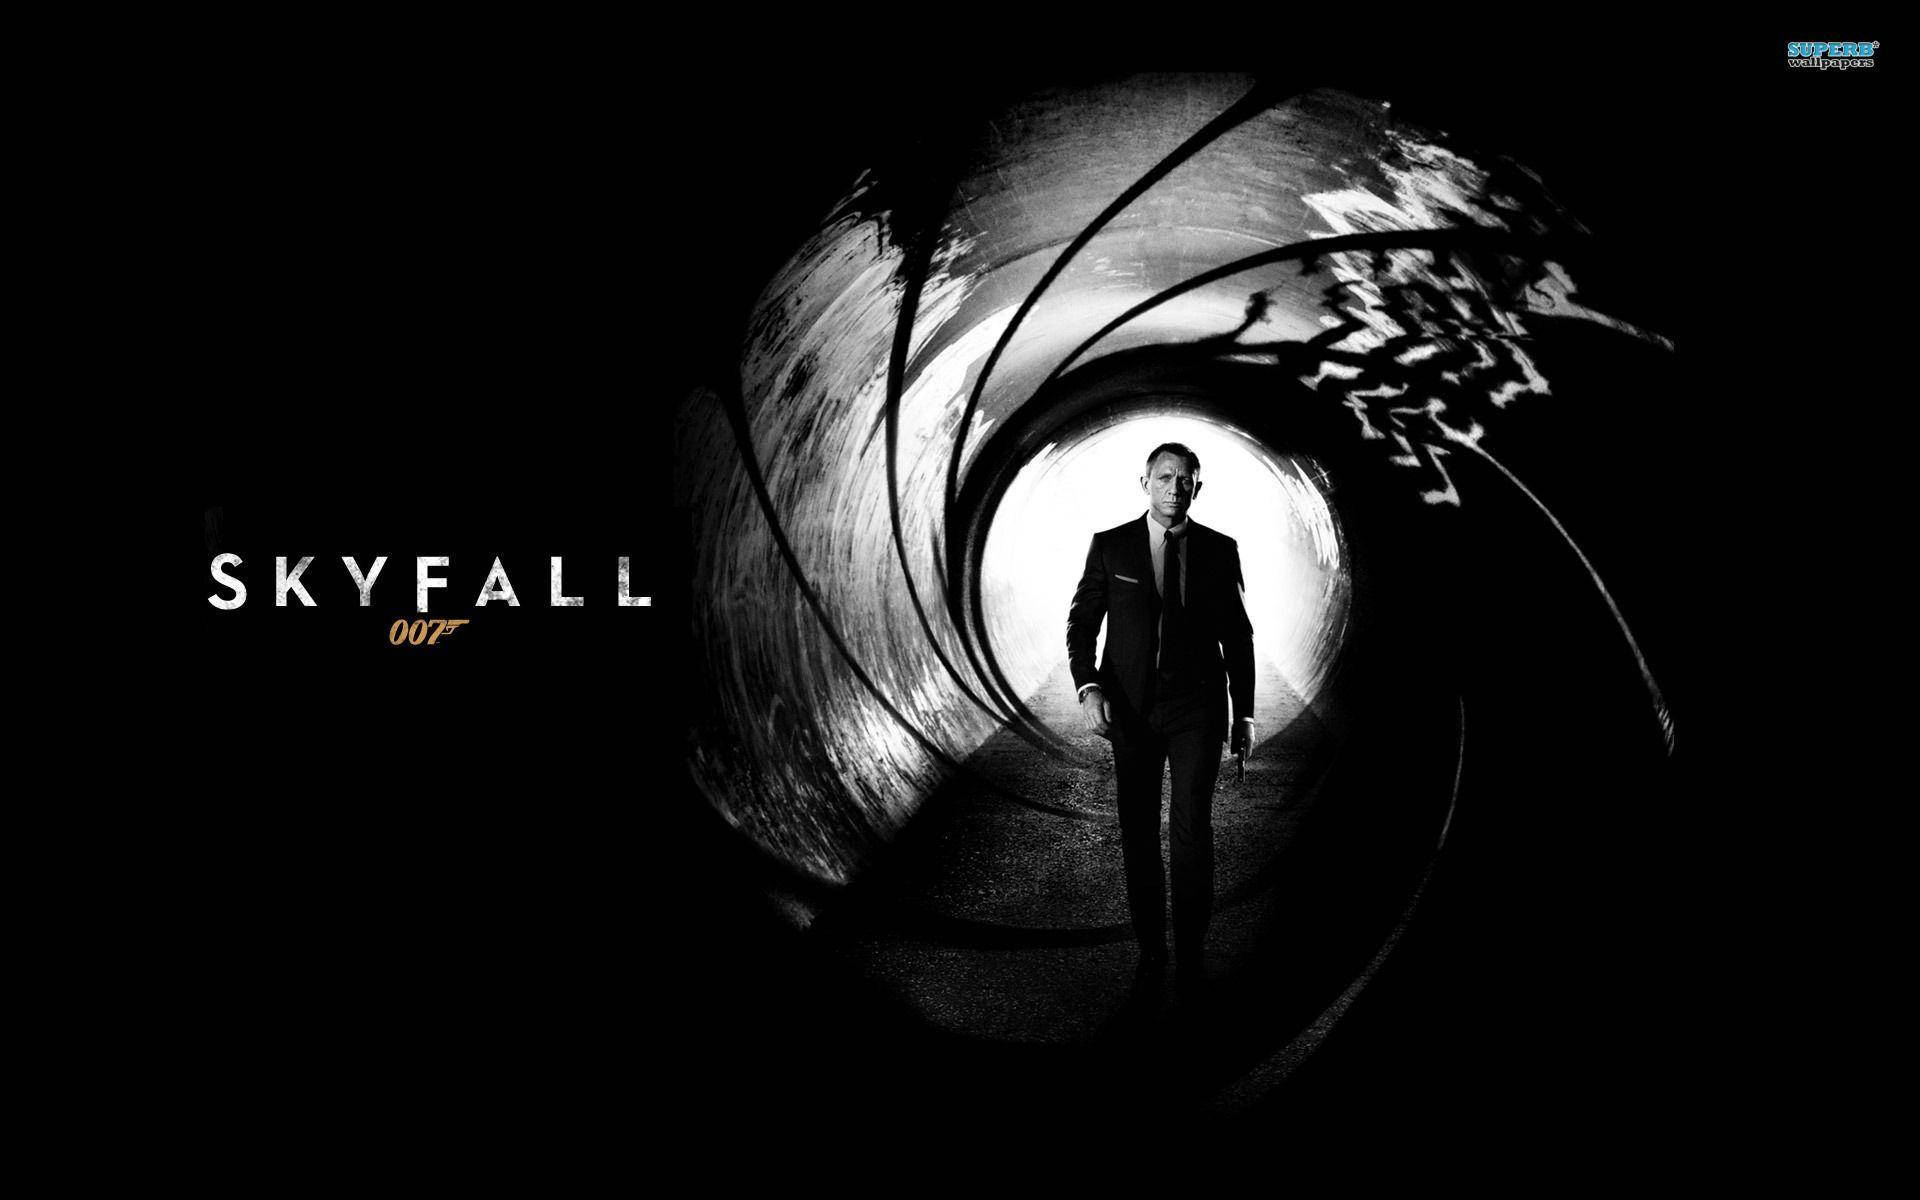 James Bond Skyfall Poster Background